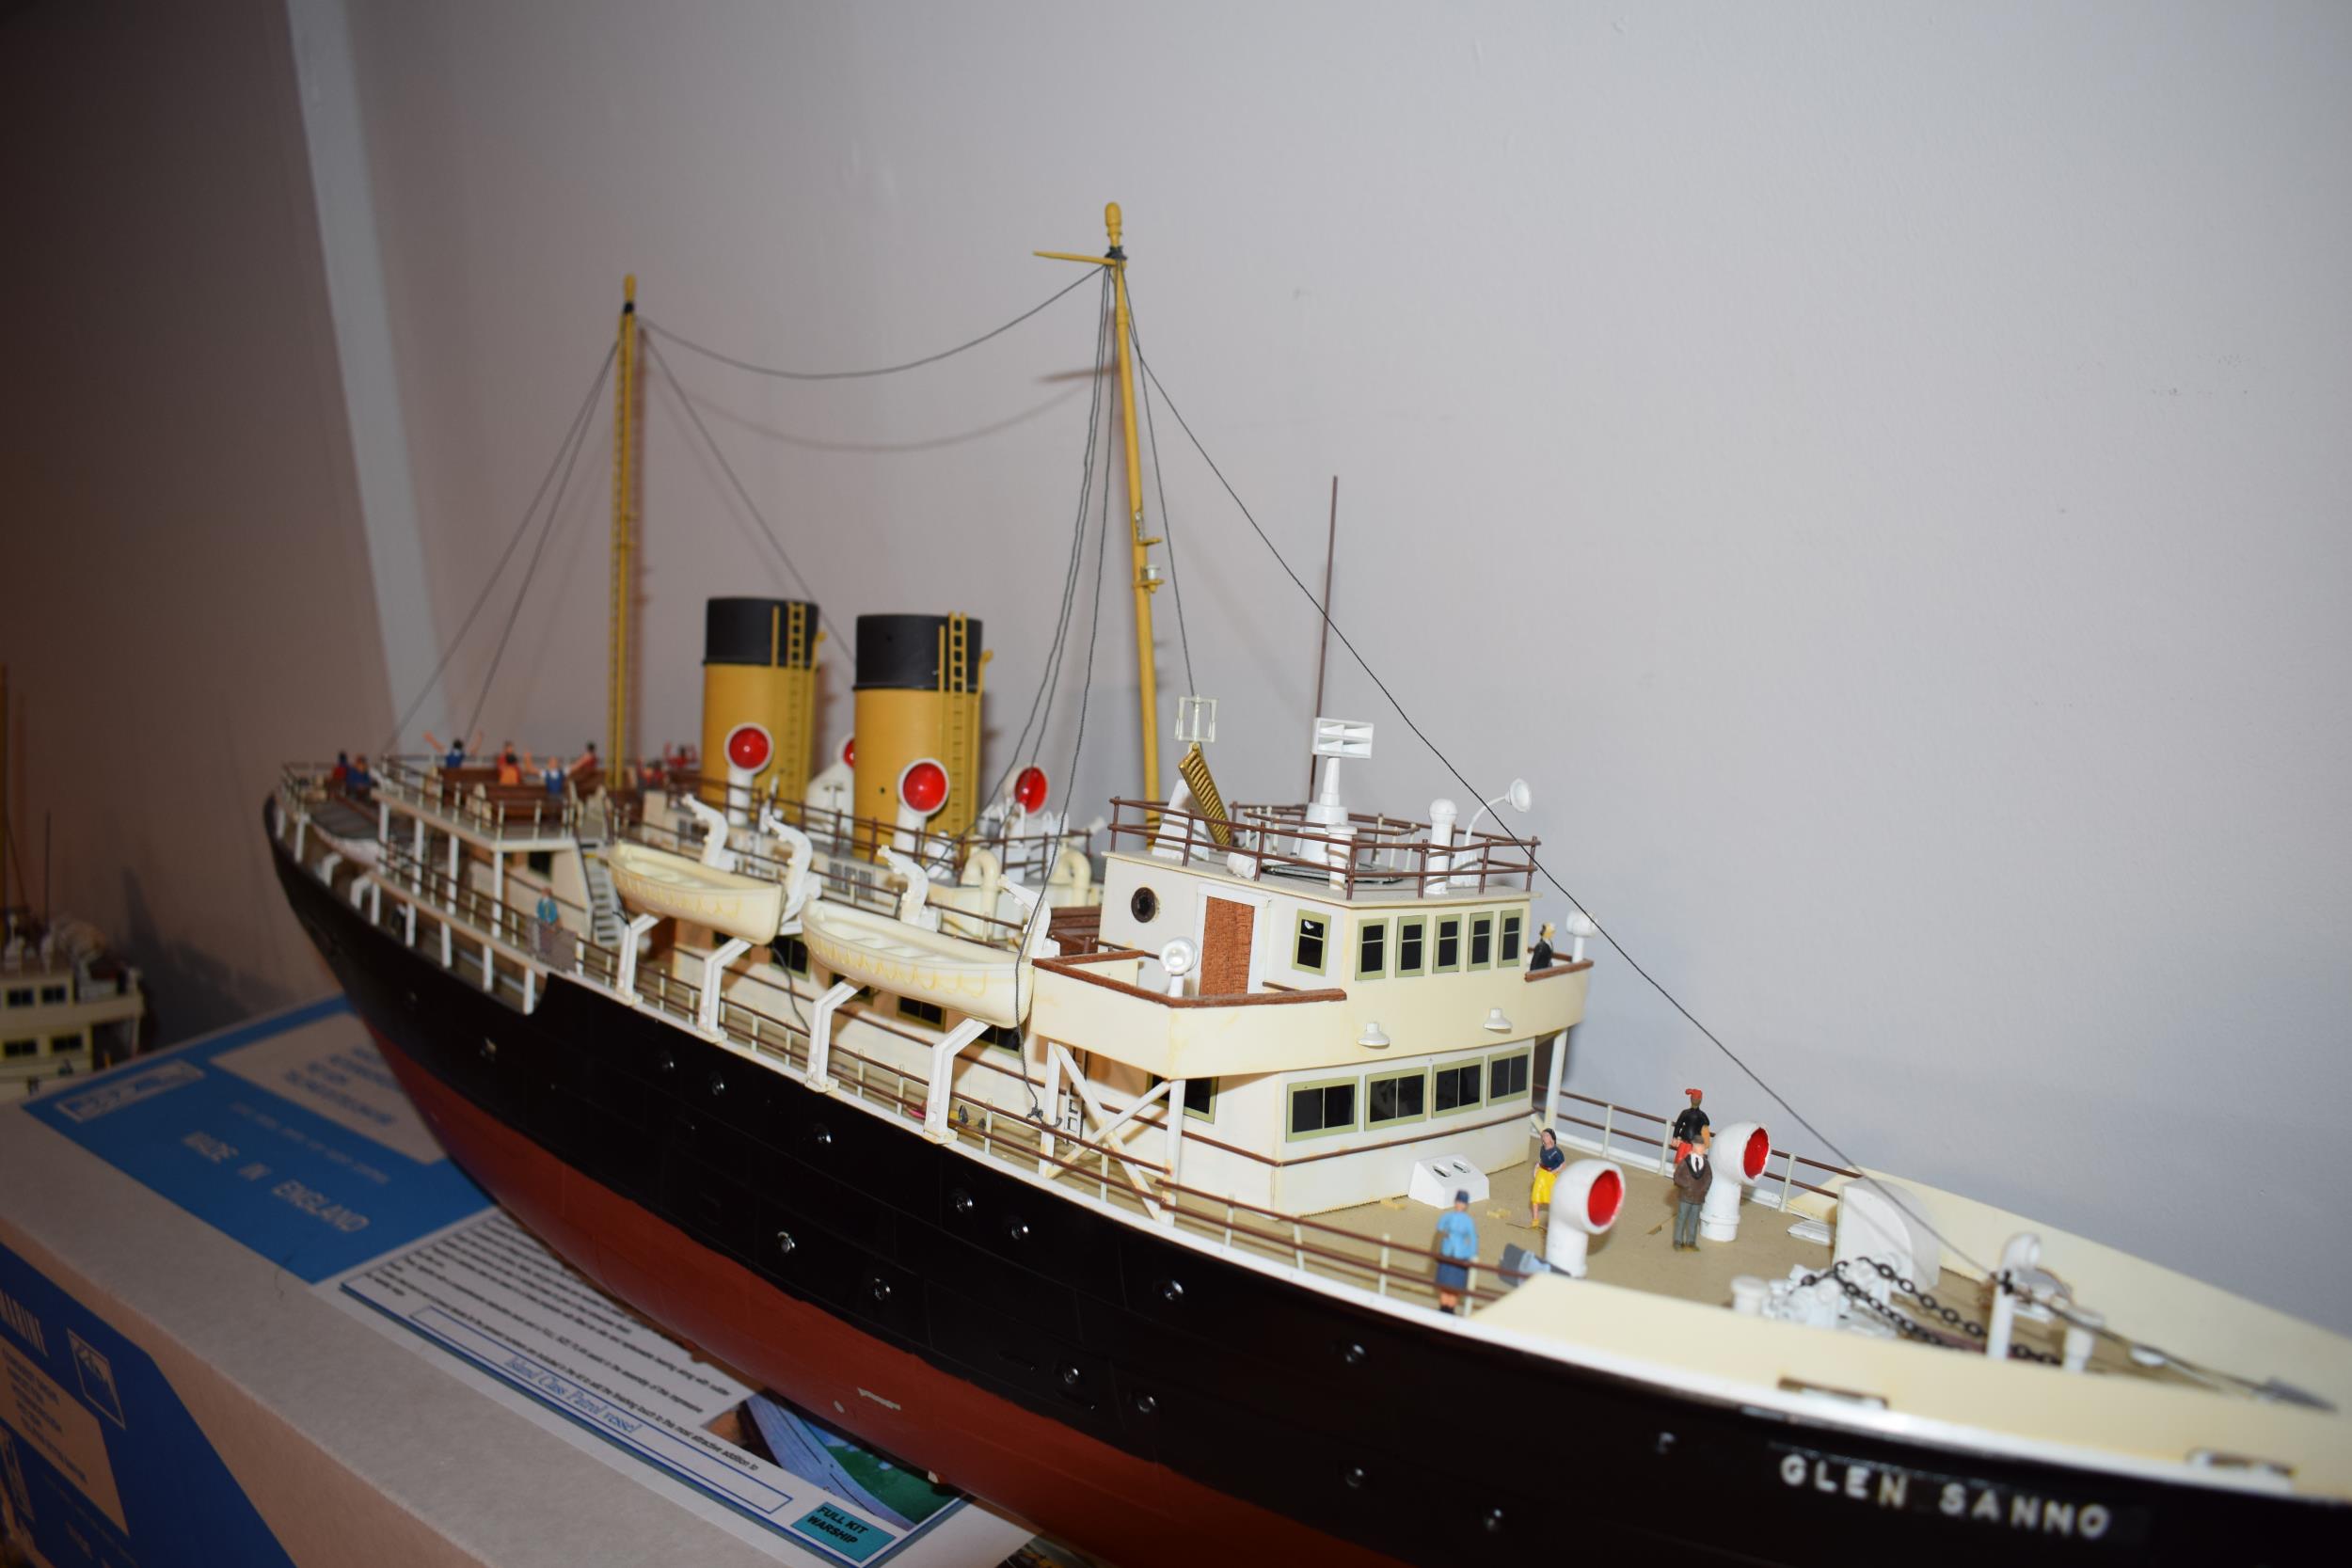 Model Boat, Kit built model of the 'Glen Sanno', dual funnel passenger ferry. Detailed rigging and - Image 4 of 8